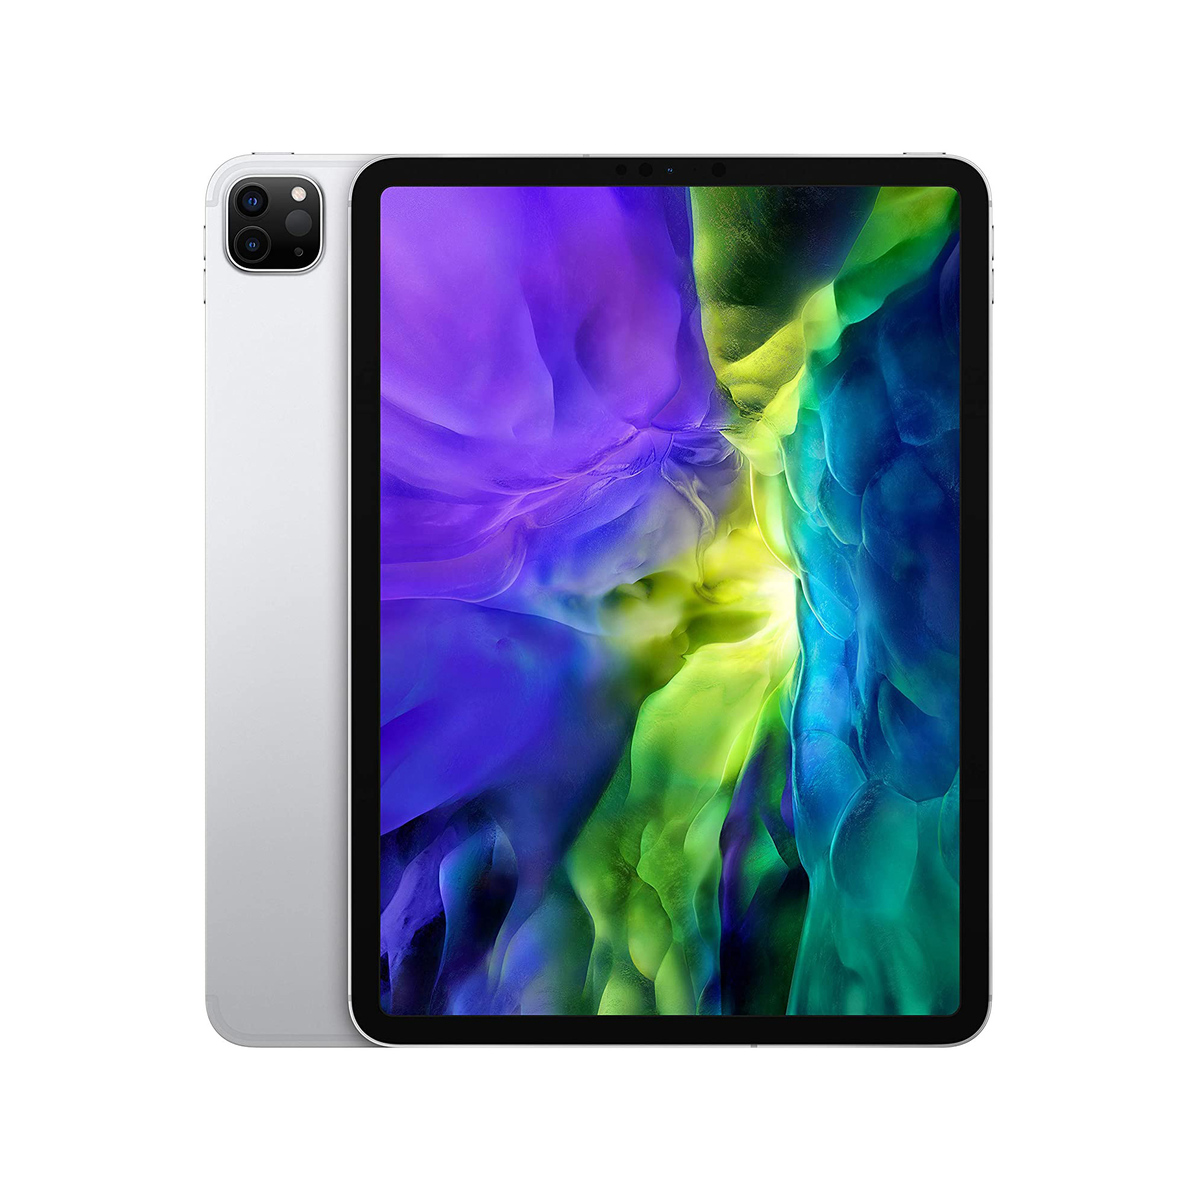 Apple iPad Pro (11-inch, Wi-Fi + Cellular, 128GB) - Silver (2nd Generation)